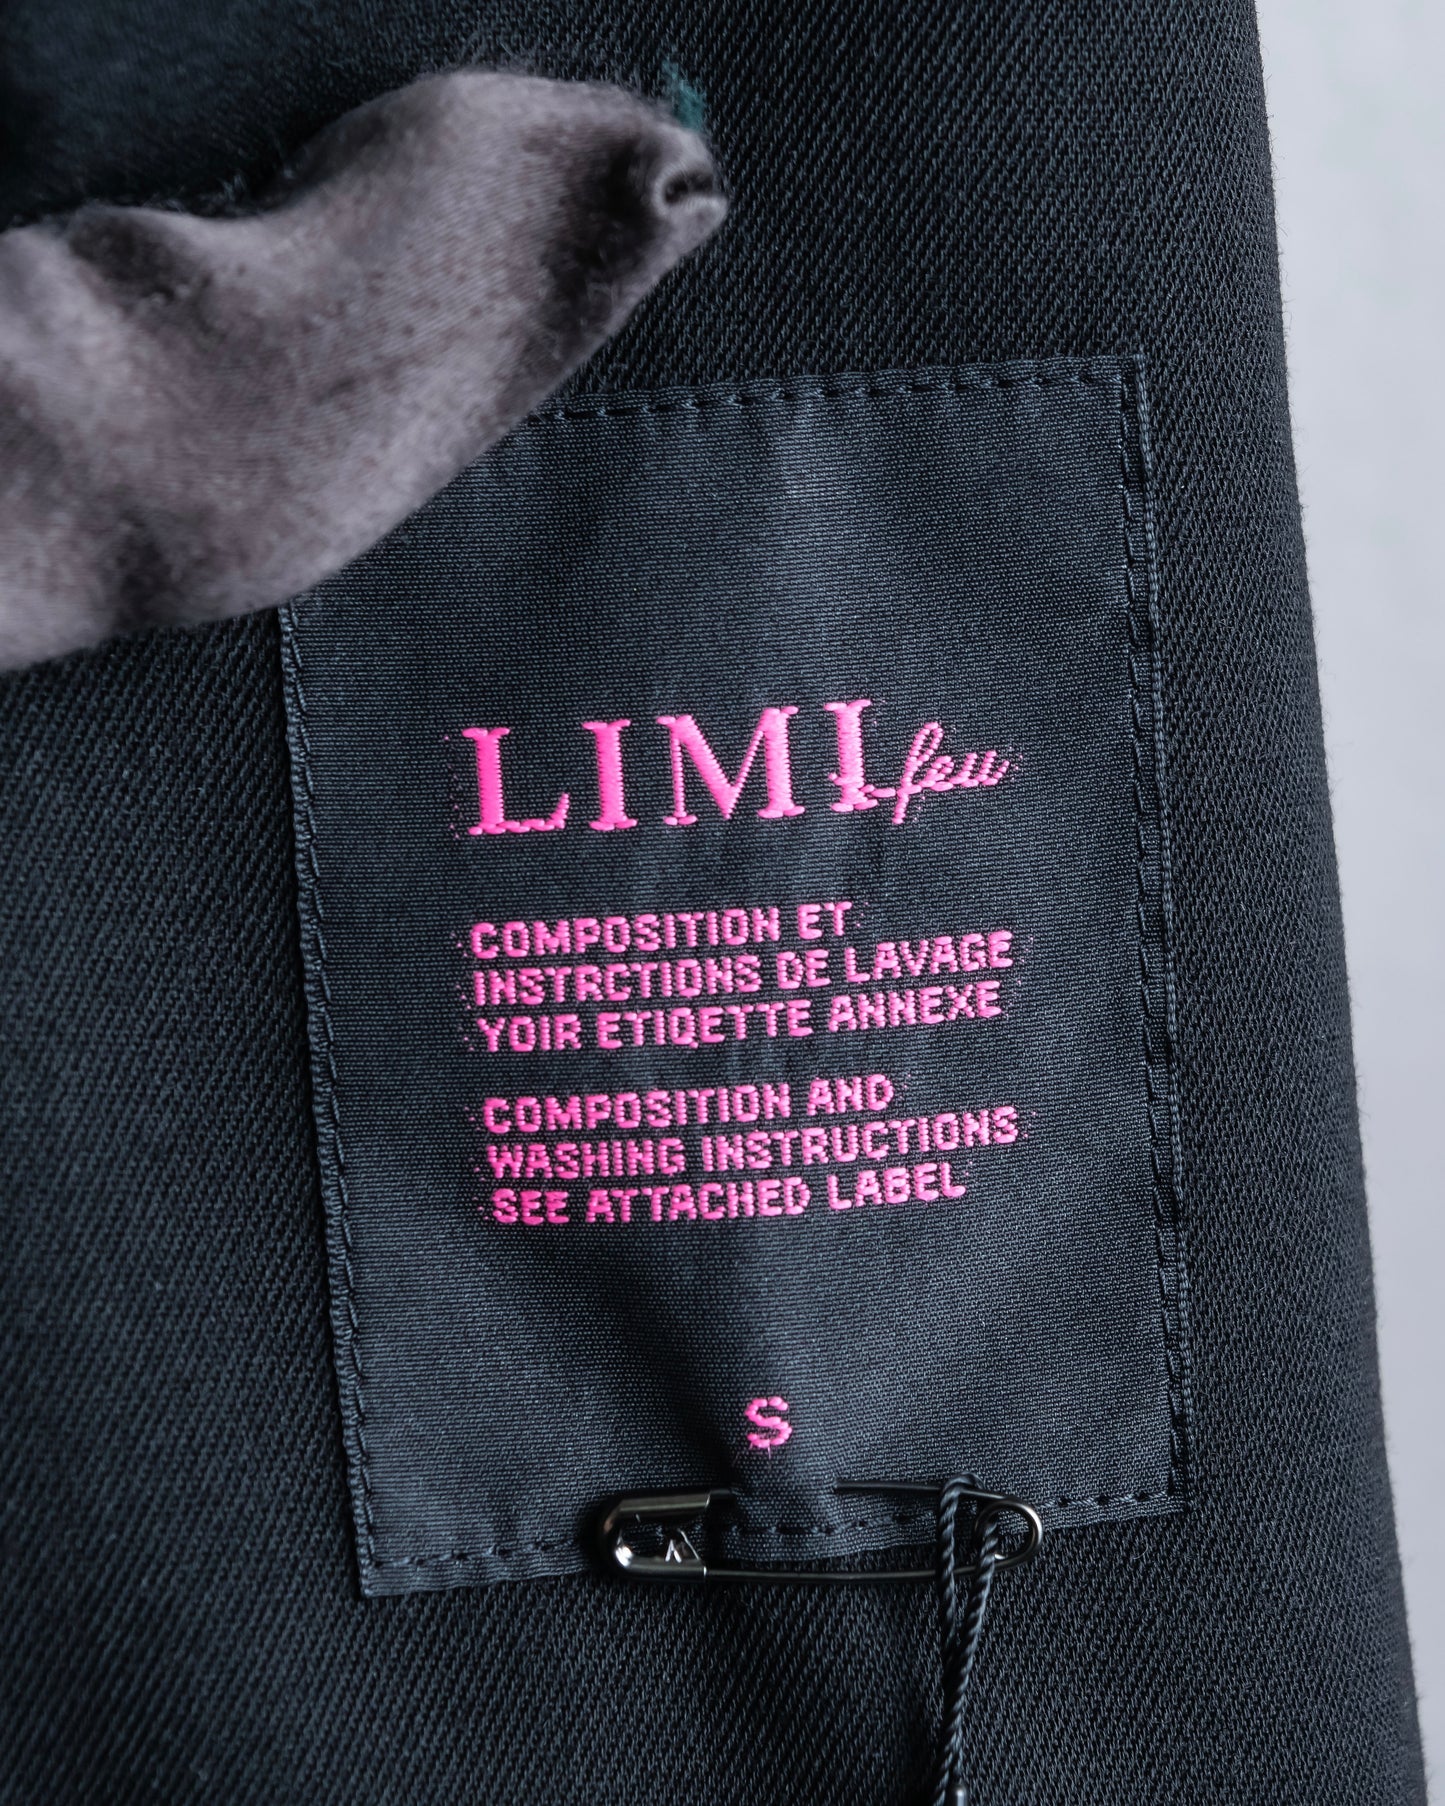 "LIMI feu" Layered embroidered sleeveless dress